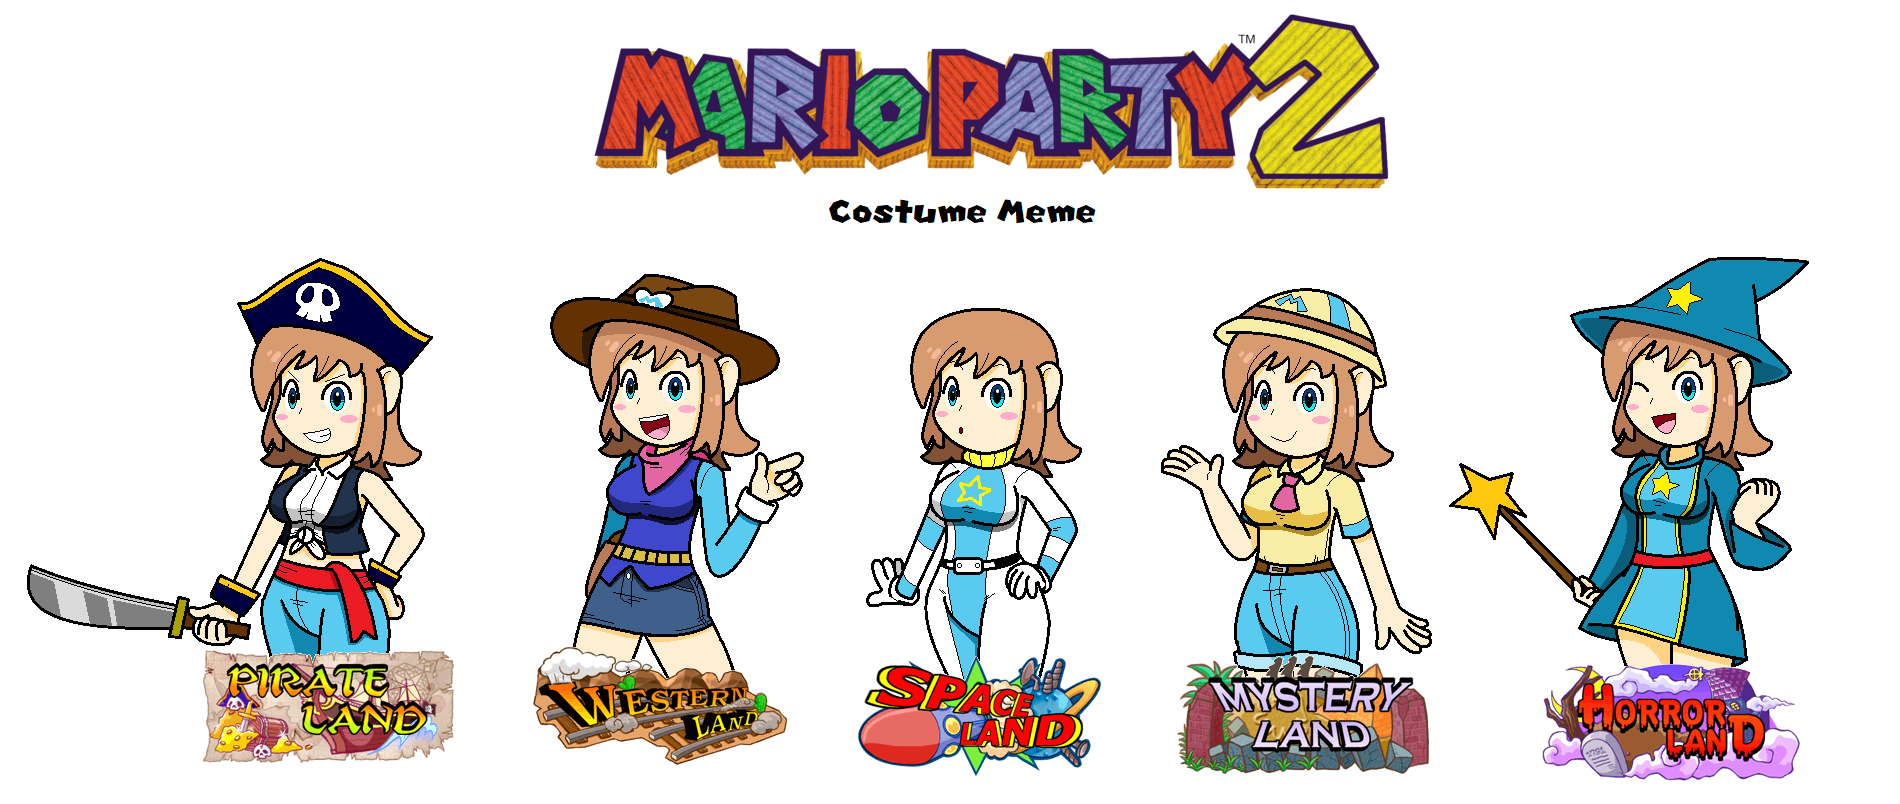 MP2 Costume Meme - Airashi.png